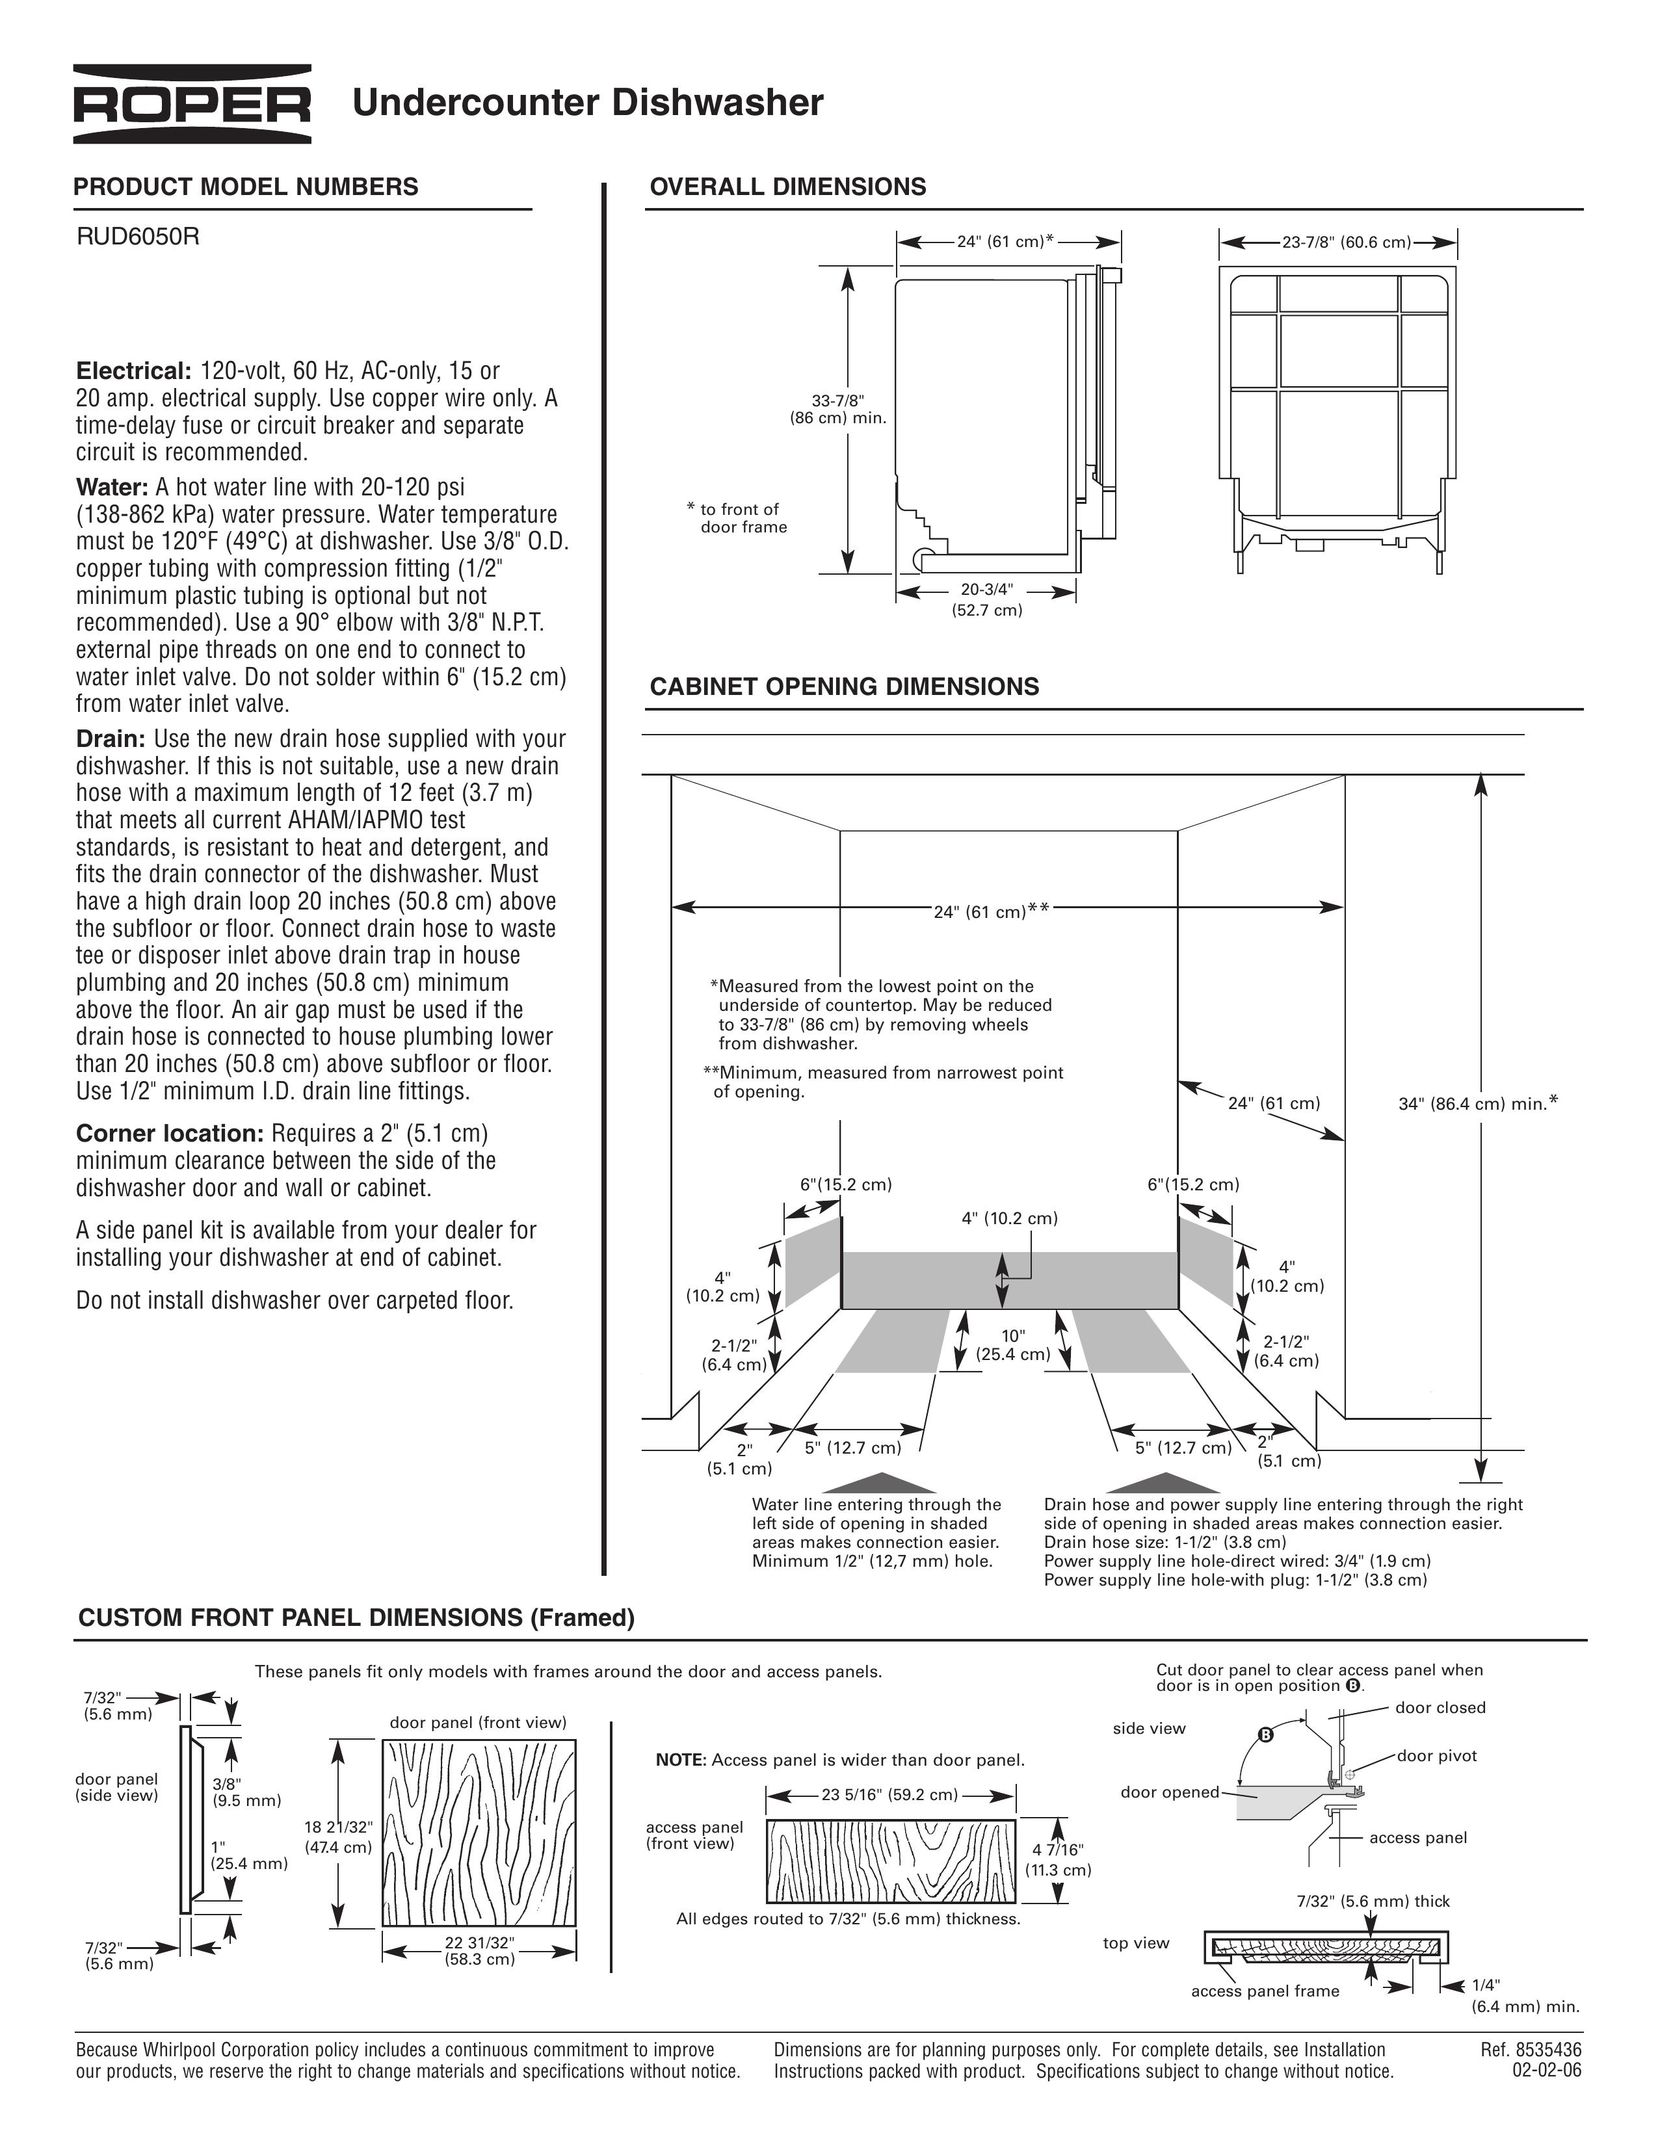 Roper RUD6050R Dishwasher User Manual